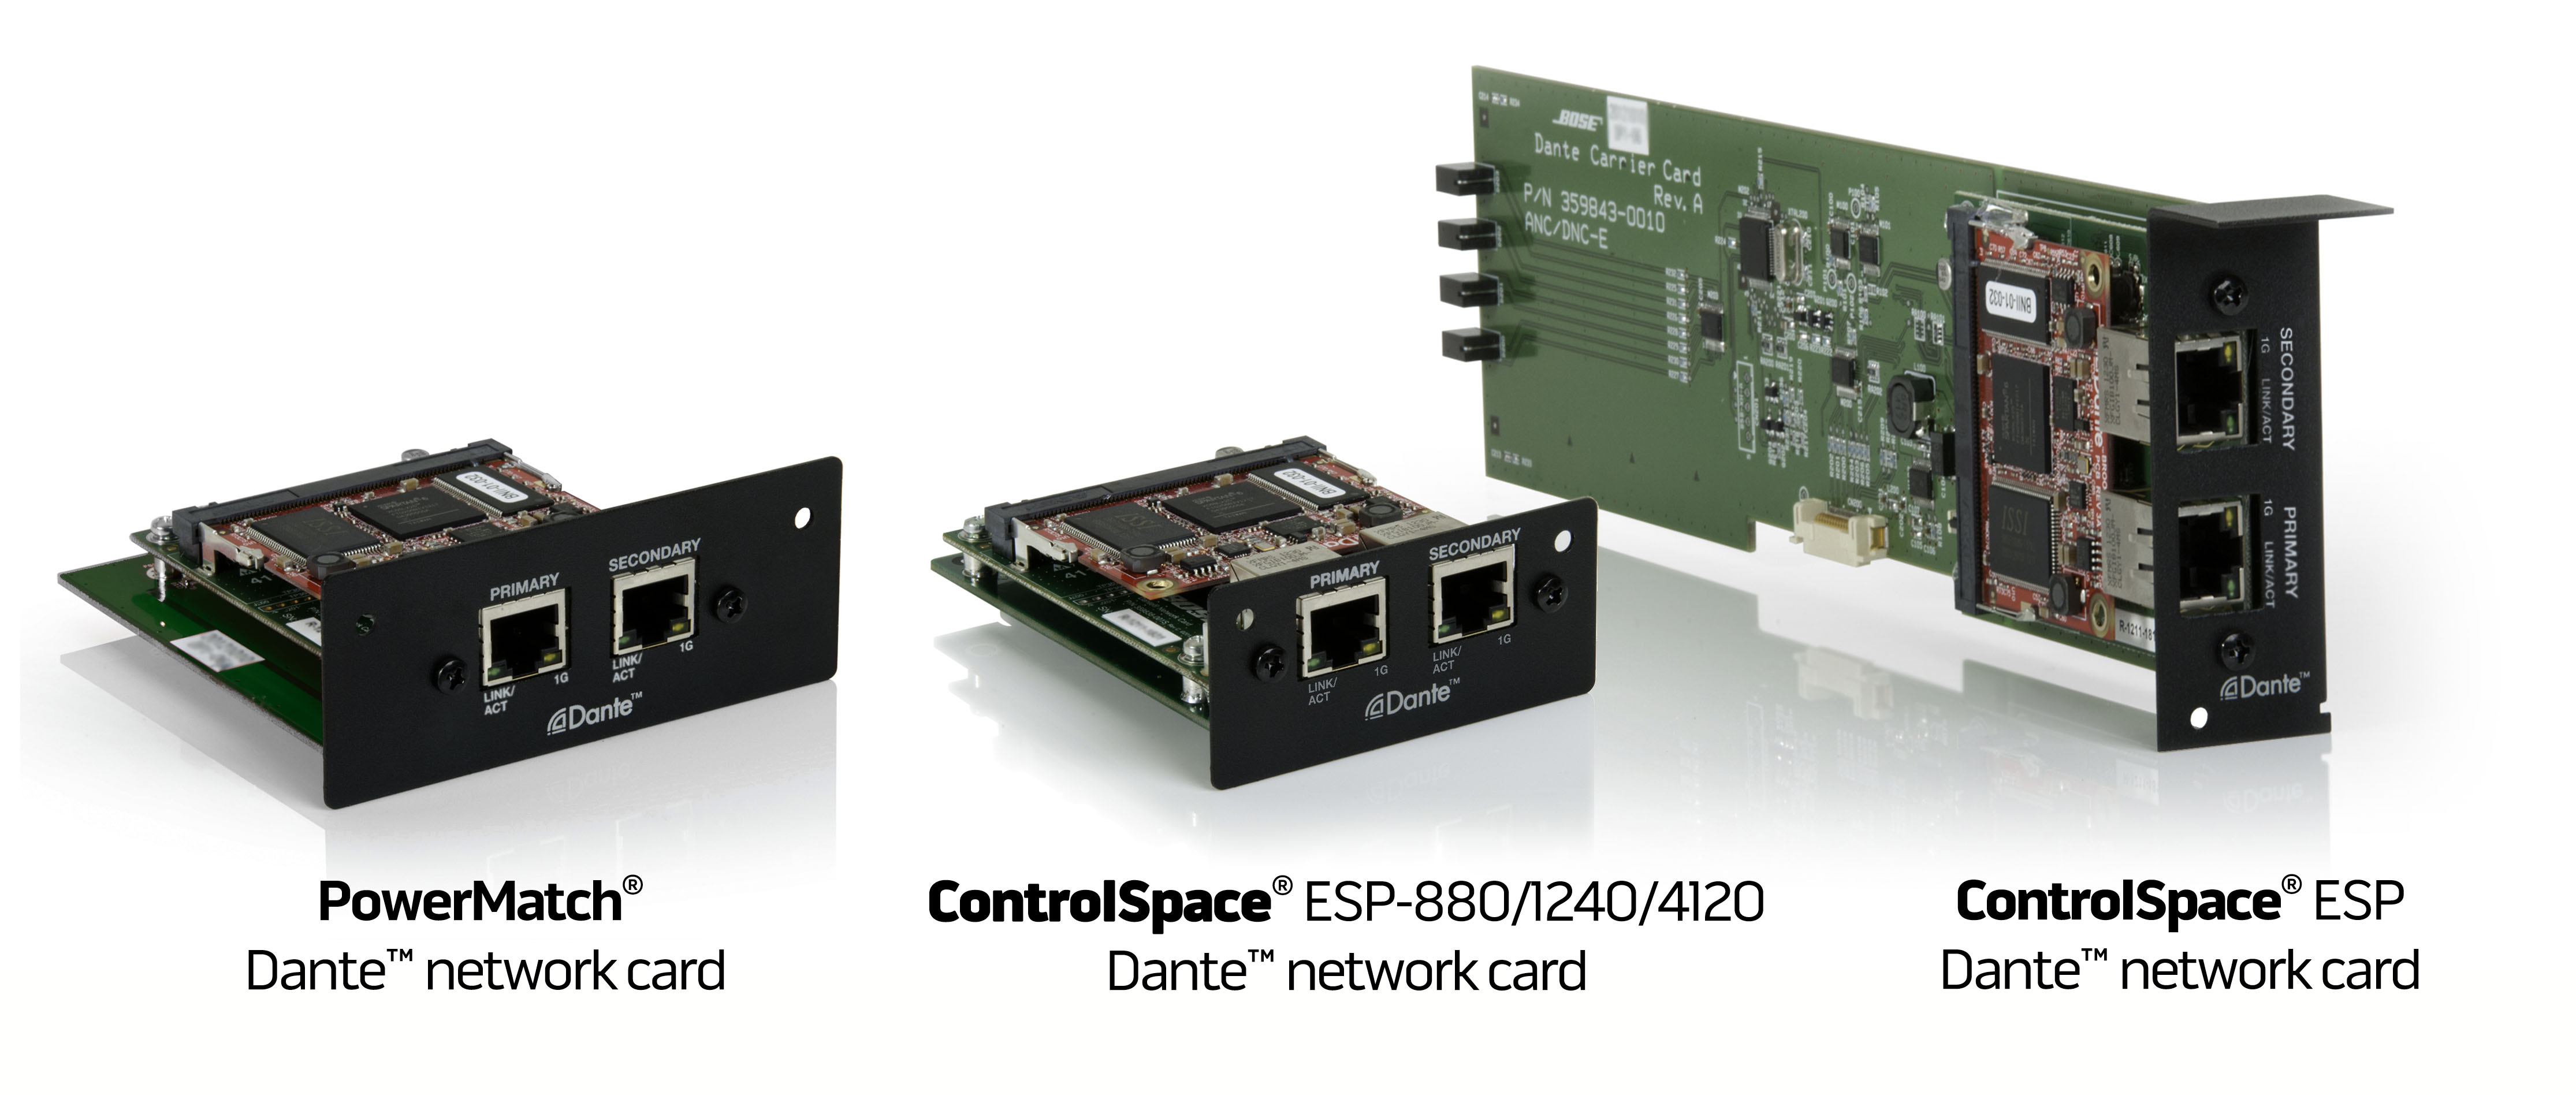 Bose ControlSpace ESP Dante network card